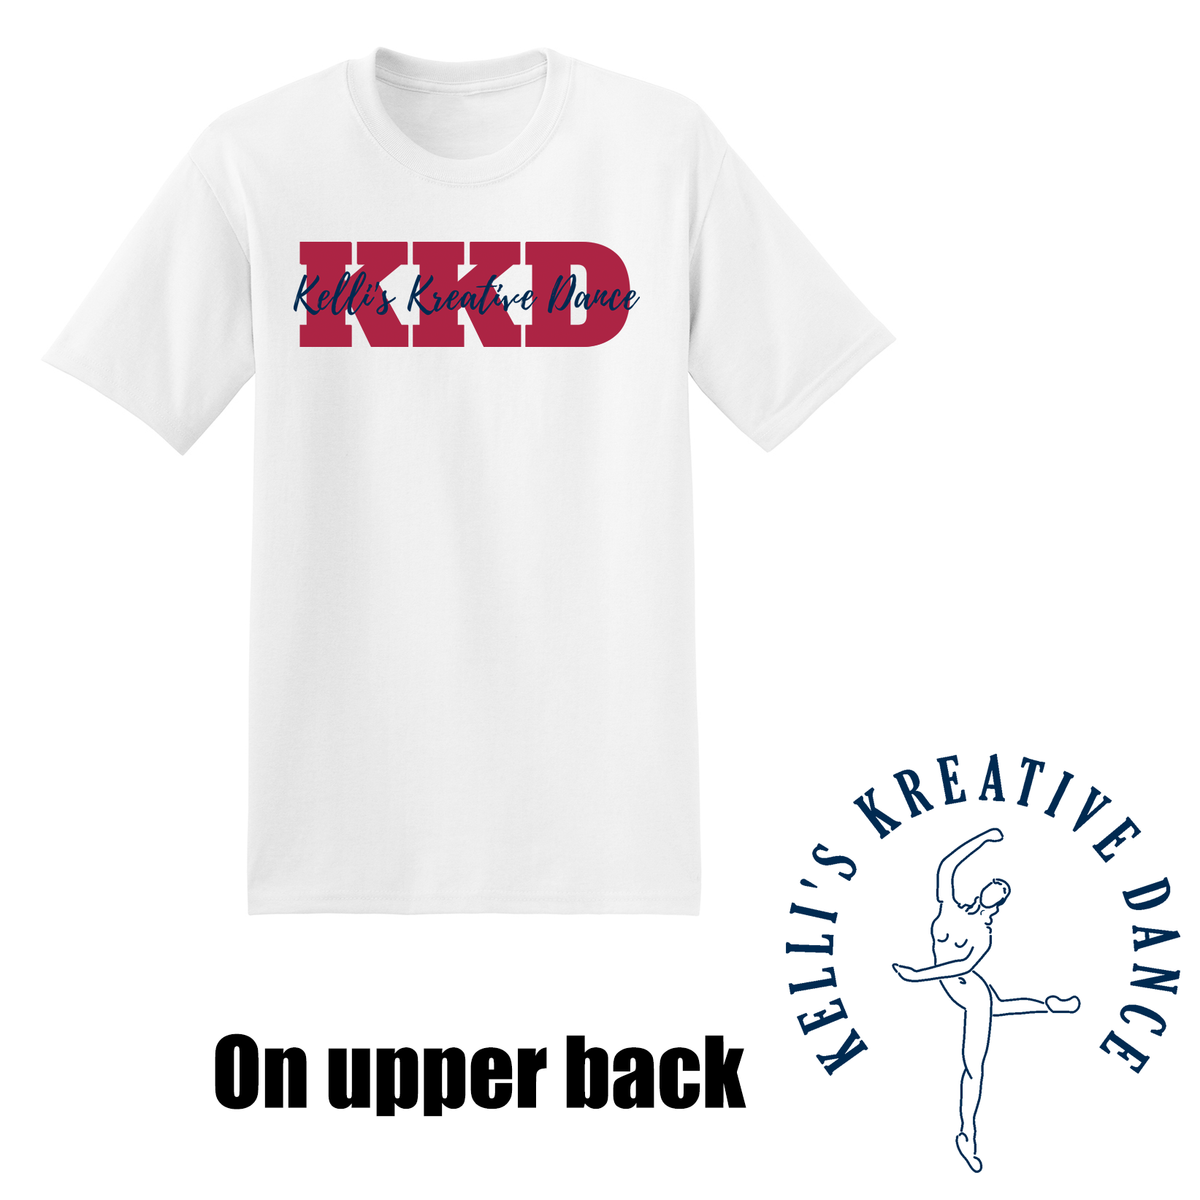 Kelli's Kreative Dance T-Shirt